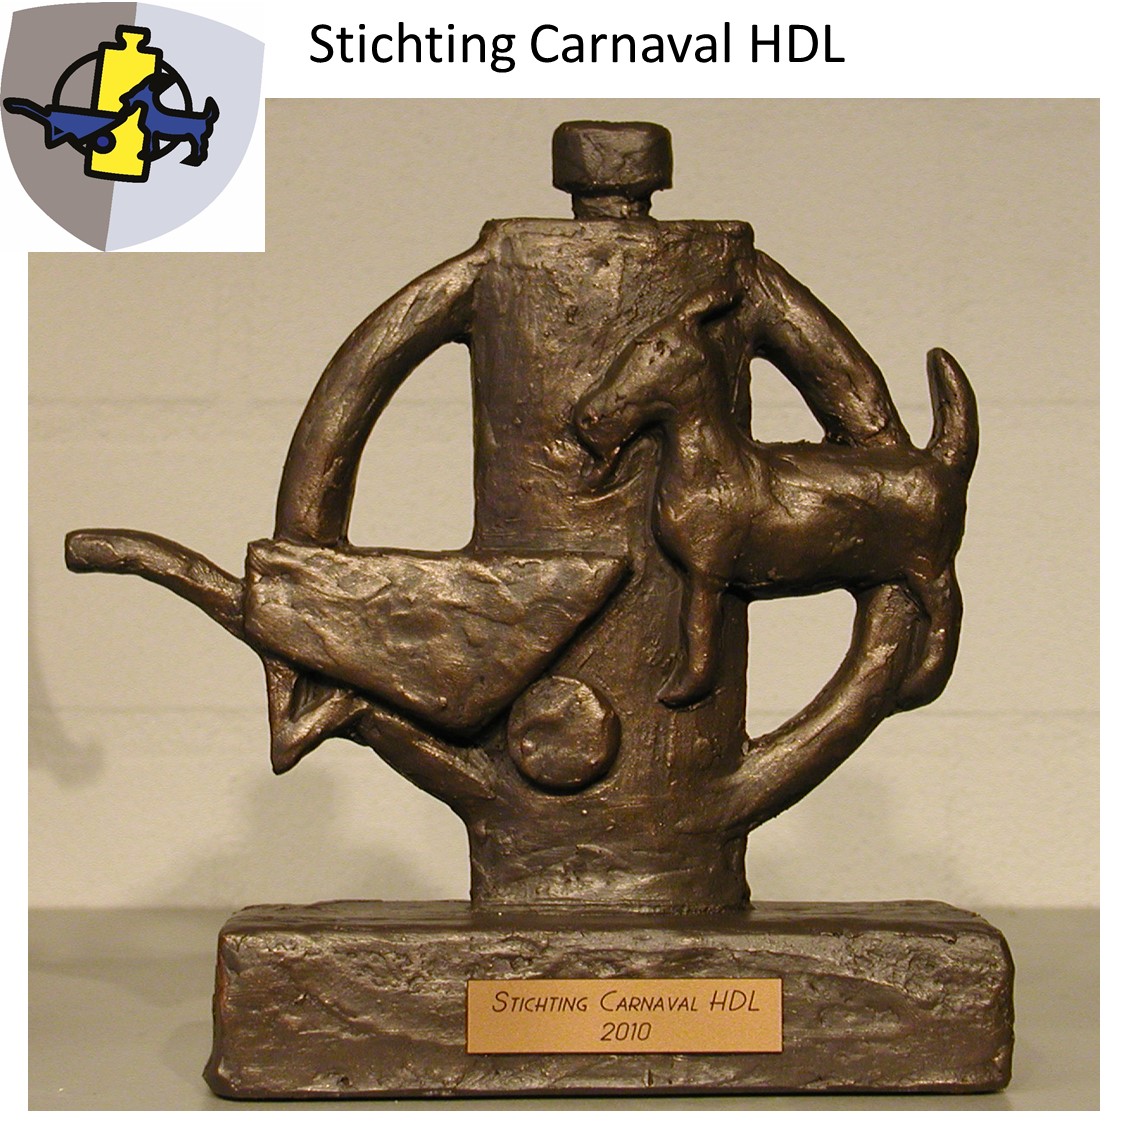 Stichtring Carnaval HDL